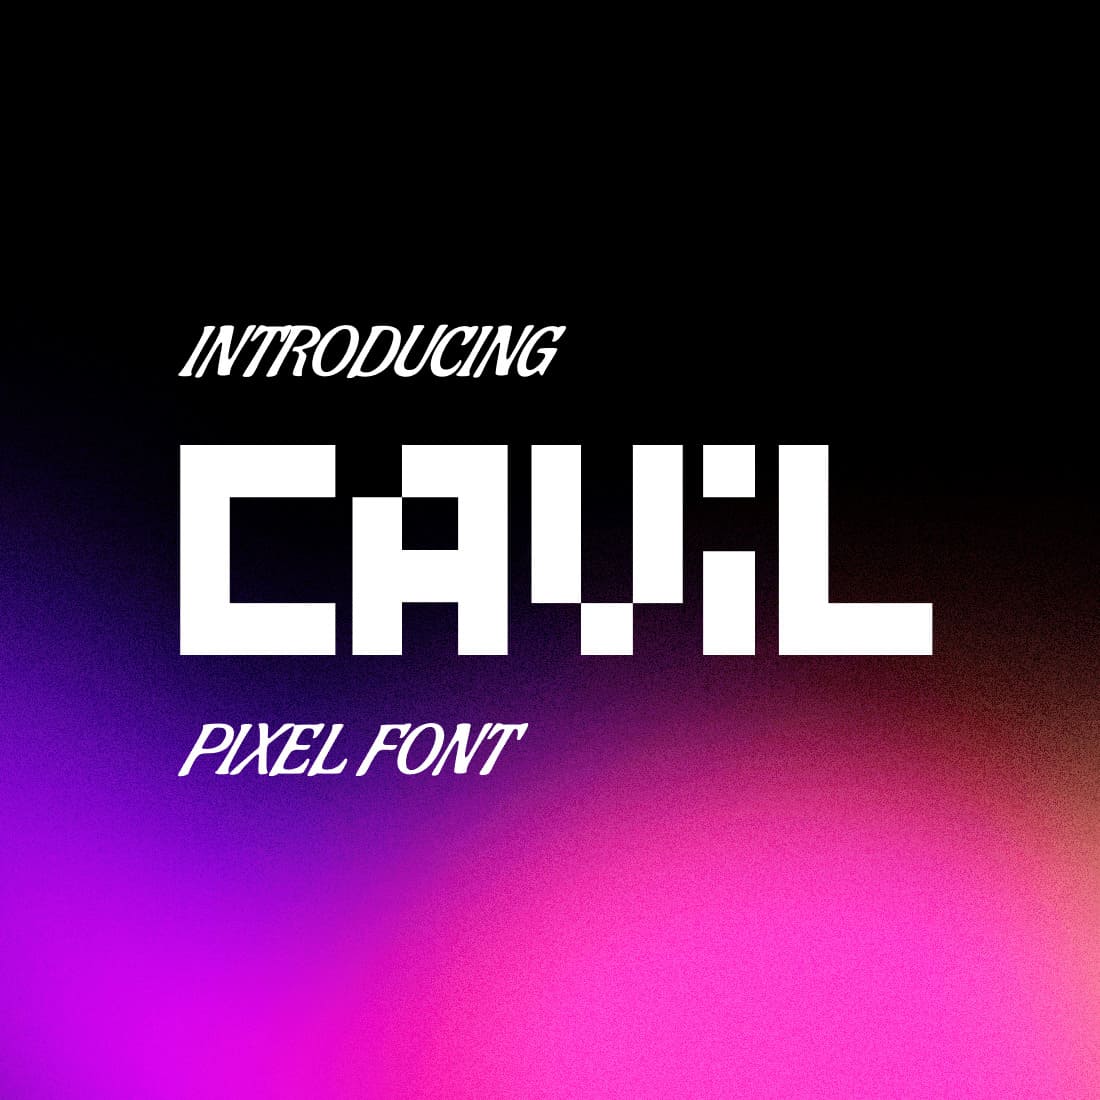 Cavil pixel font main cover by MasterBundles.